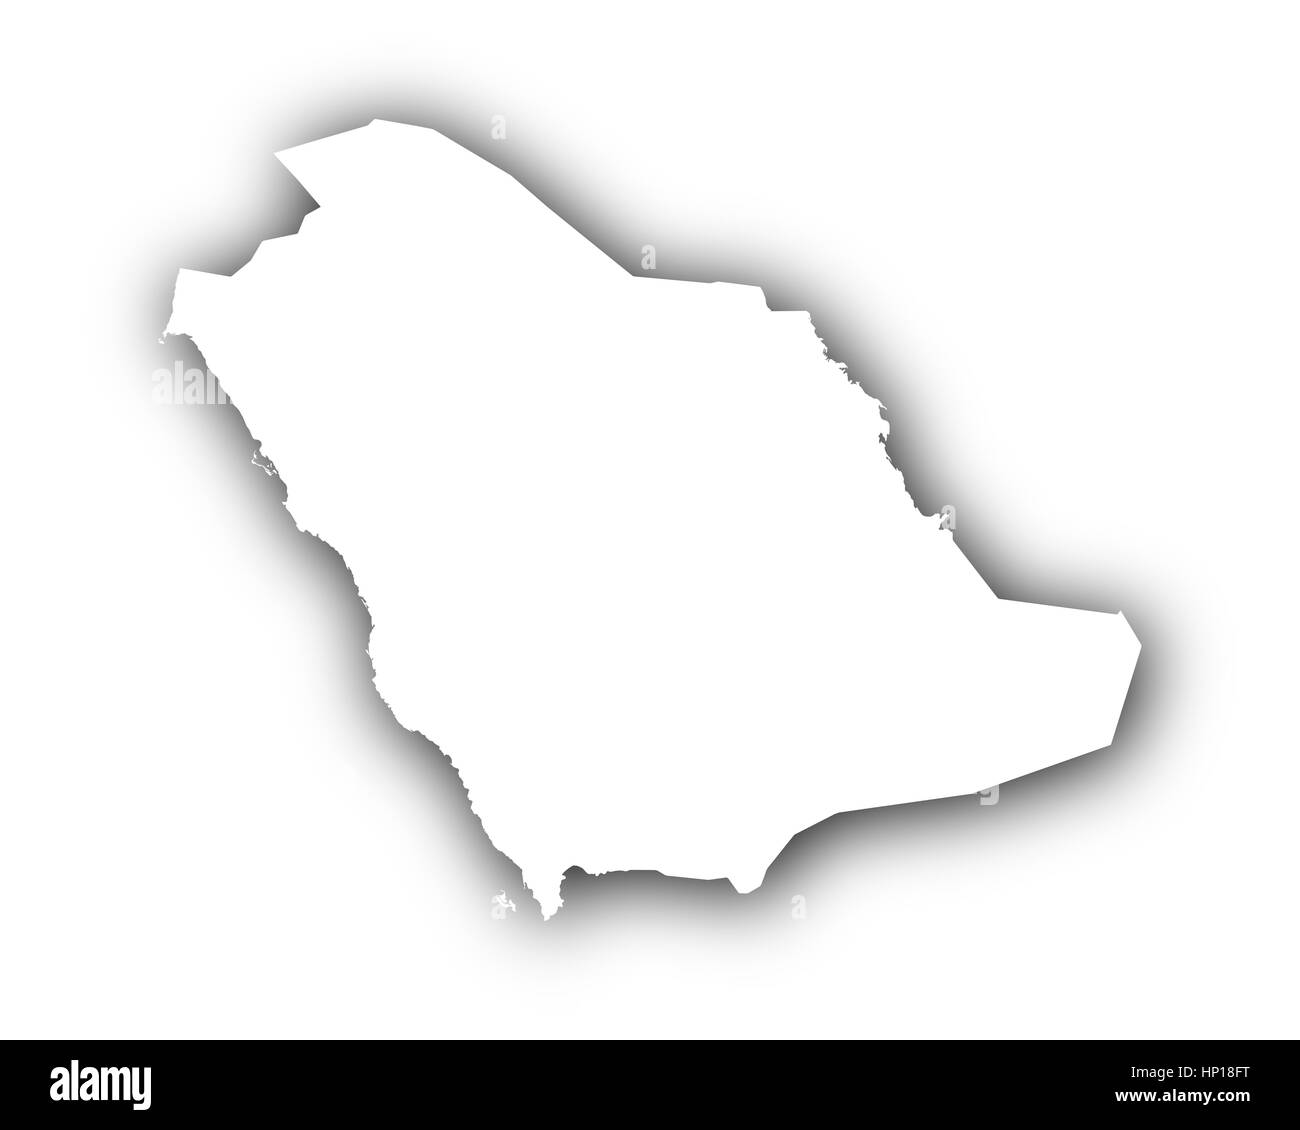 Map of Saudi Arabia with shadow Stock Photo - Alamy